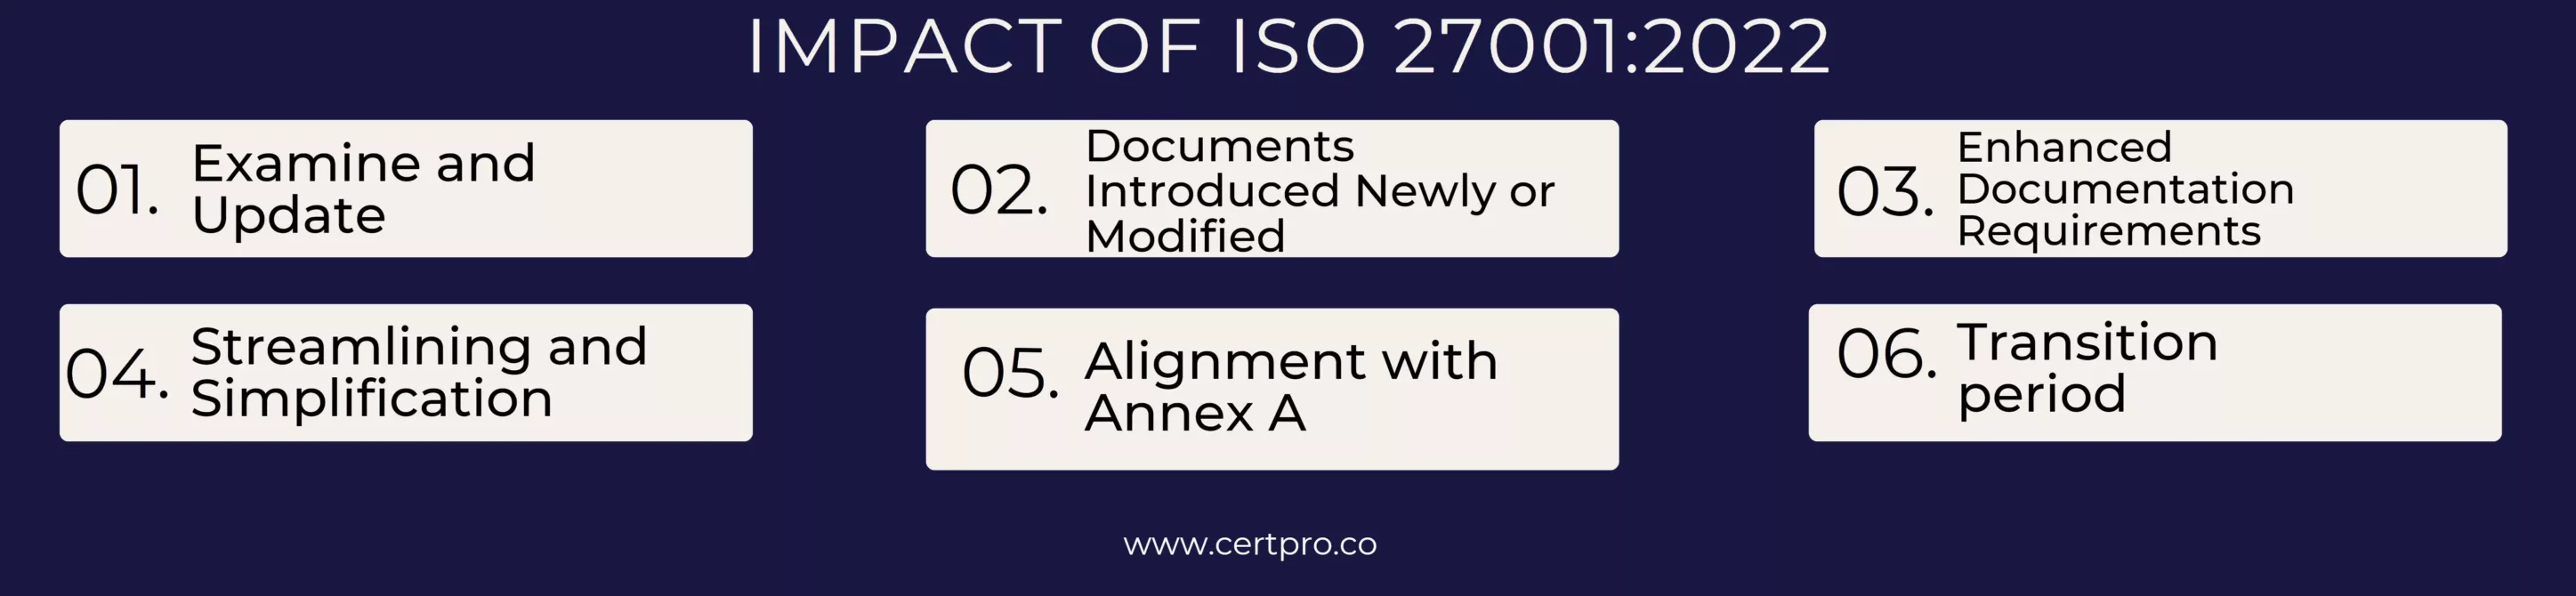 Impact Of ISO 27001